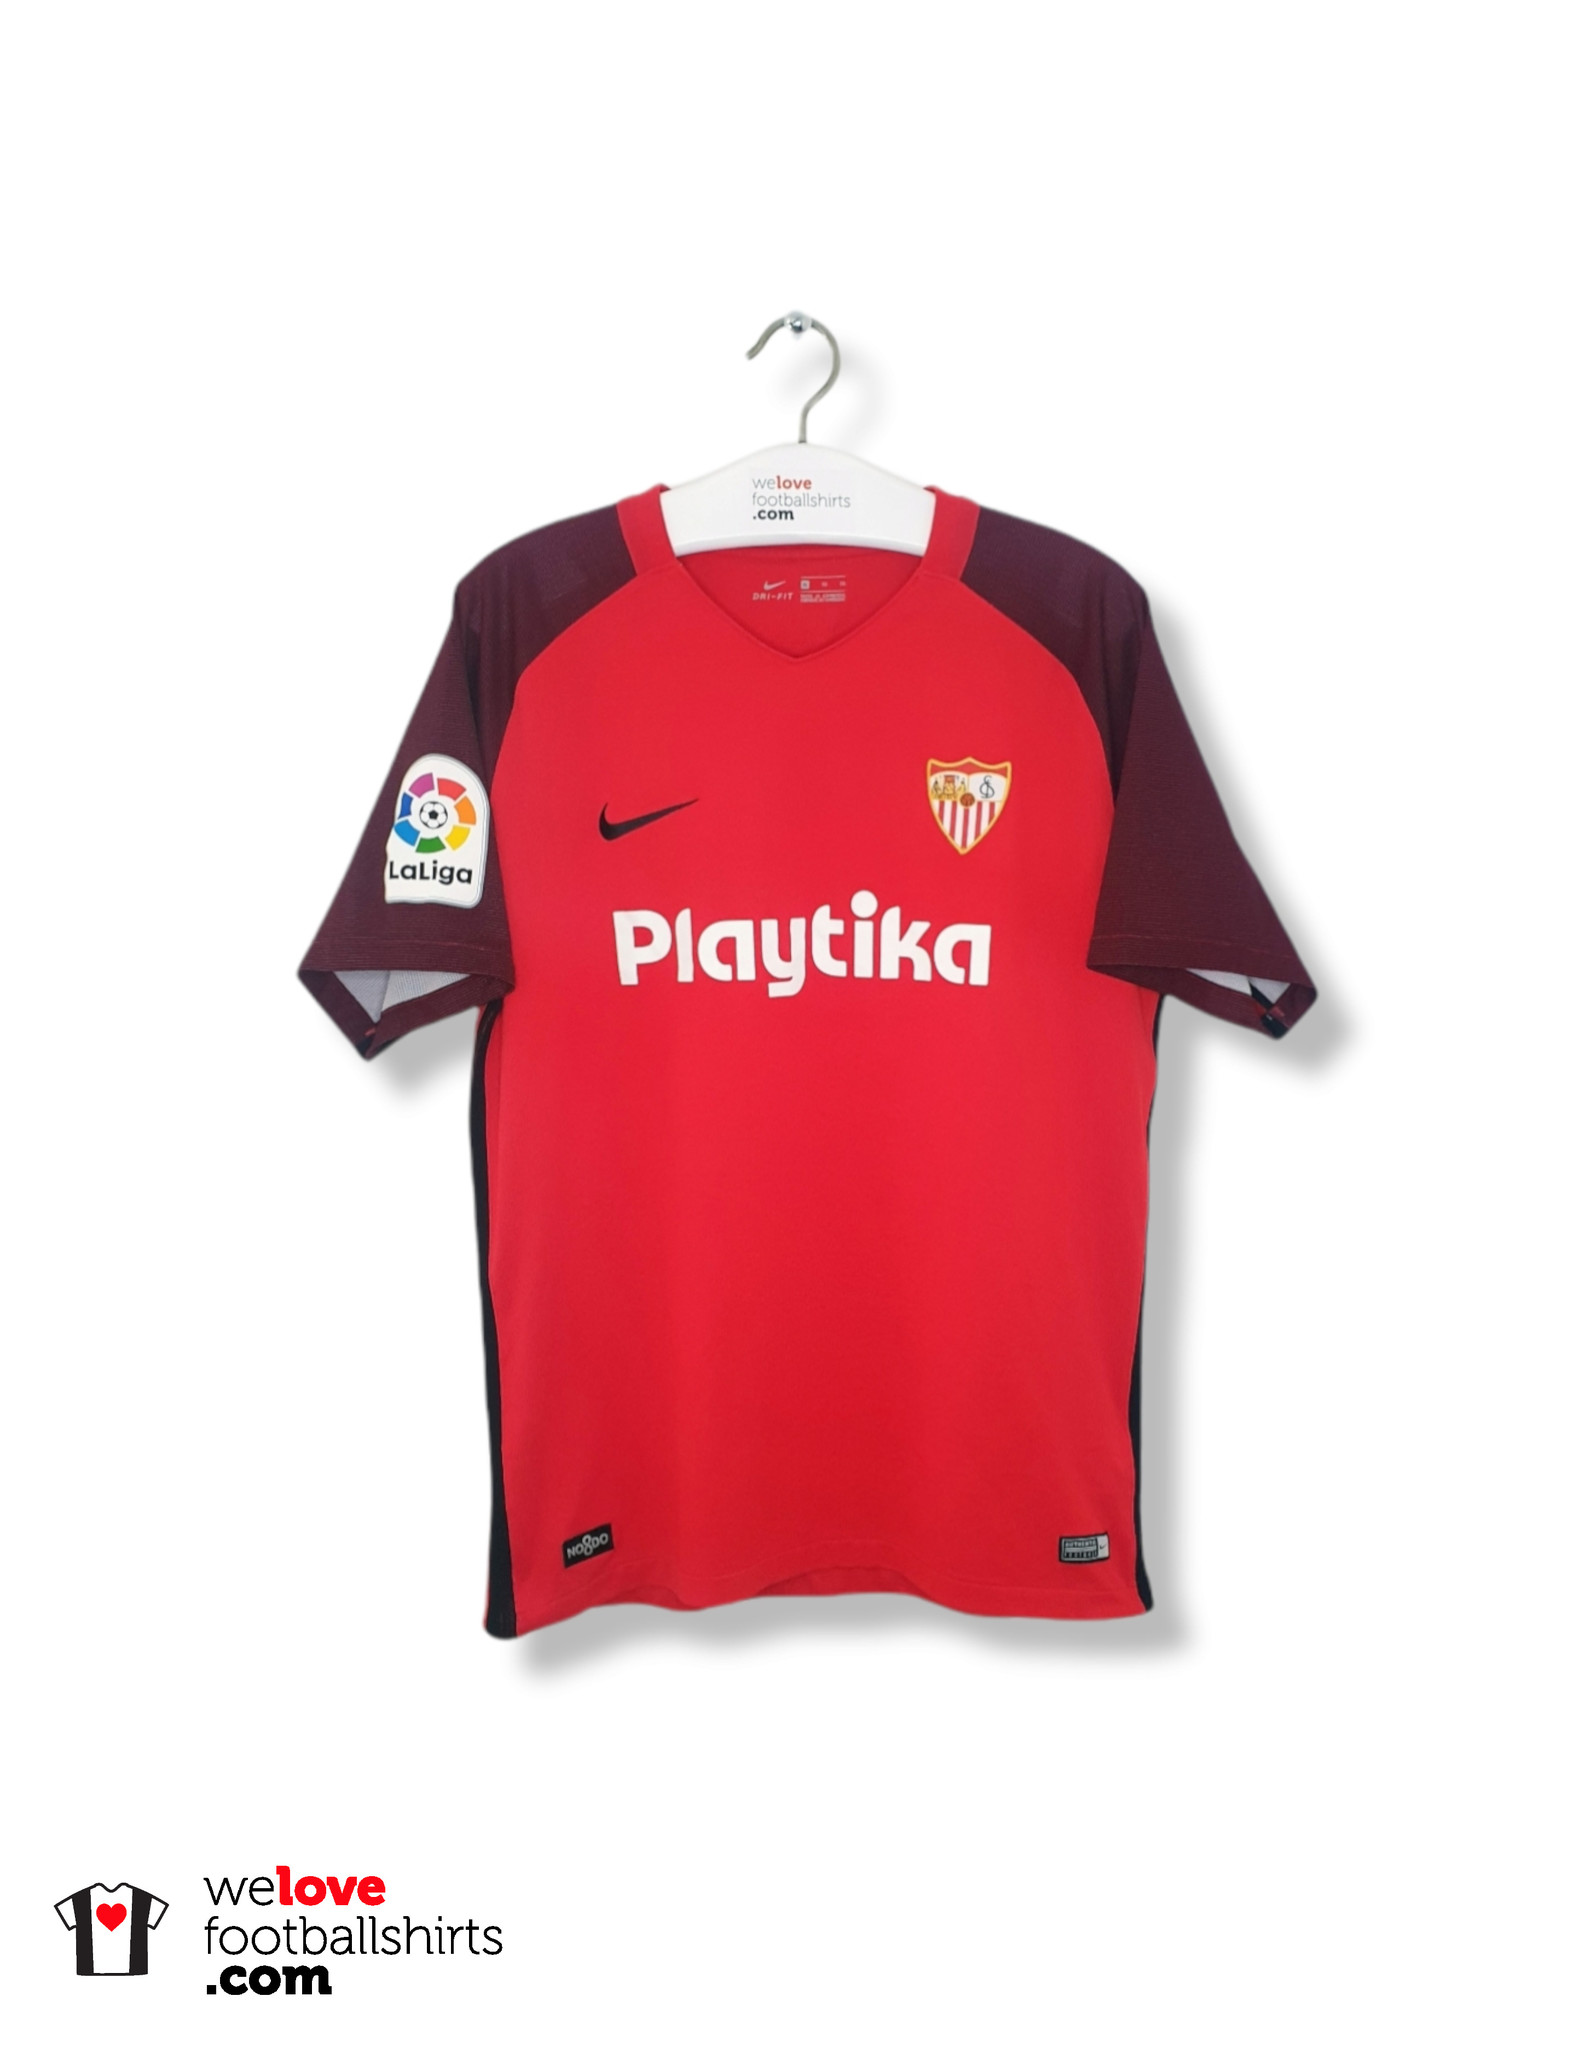 Correspondiente a Alabama golpear Nike football shirt Sevilla FC 2018/19 - Welovefootballshirts.com